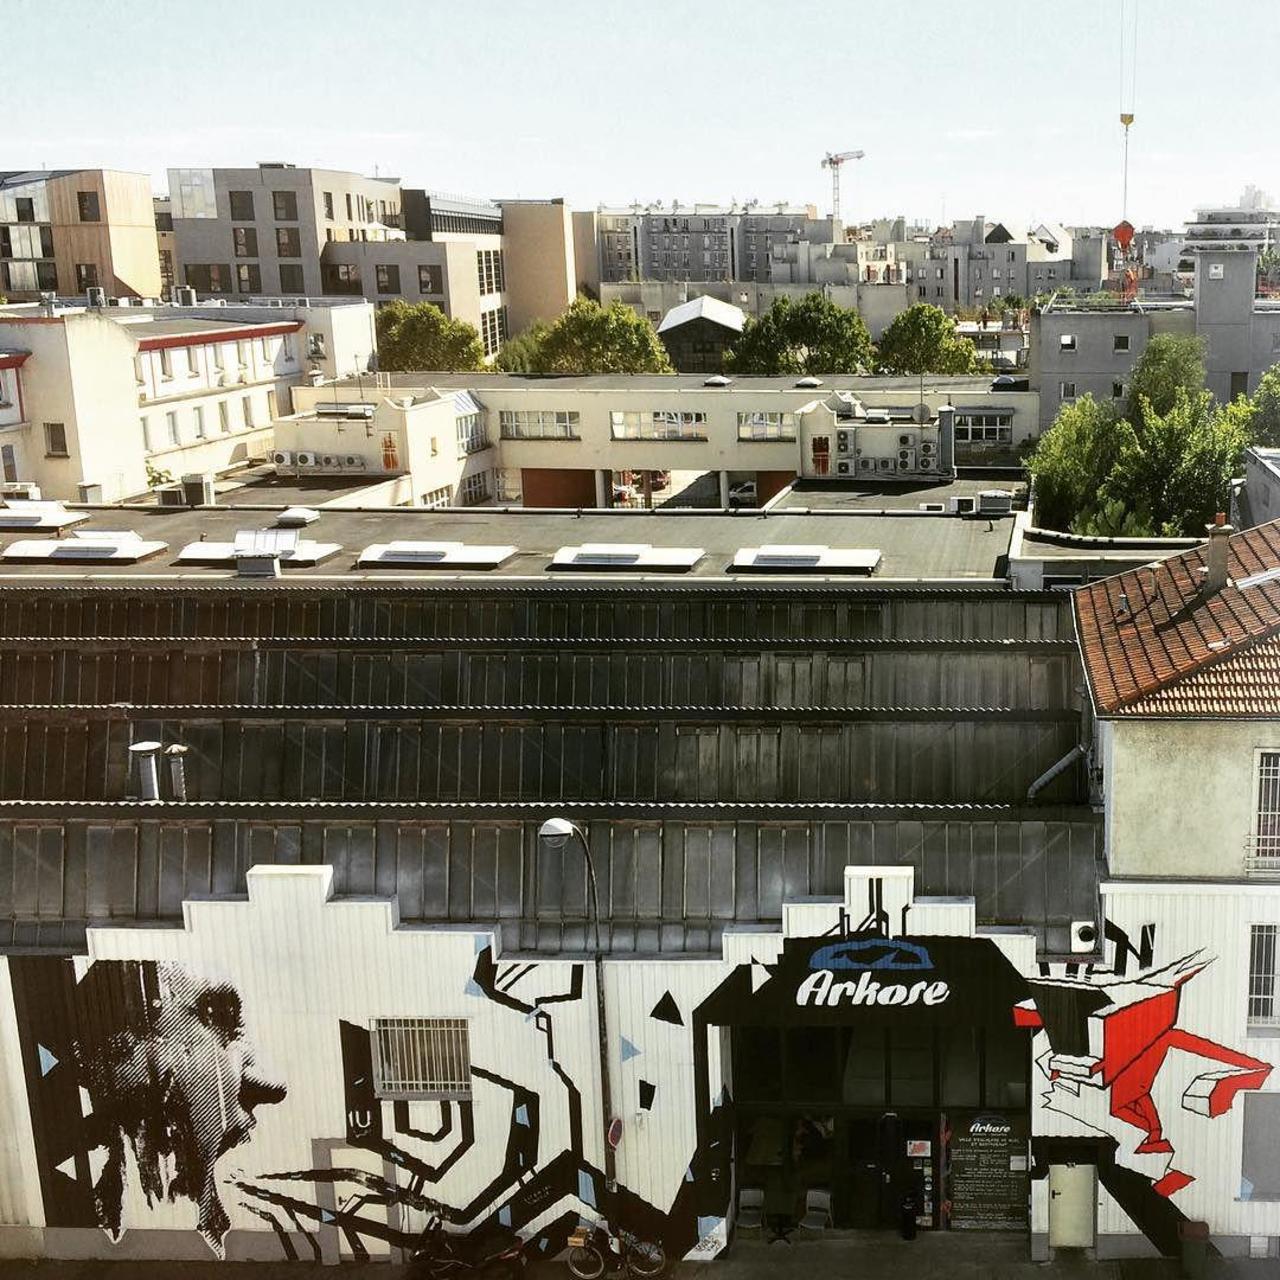 #Paris #graffiti photo by @elricoelmagnifico http://ift.tt/1FGsTJF #StreetArt http://t.co/njNZ4GITtM